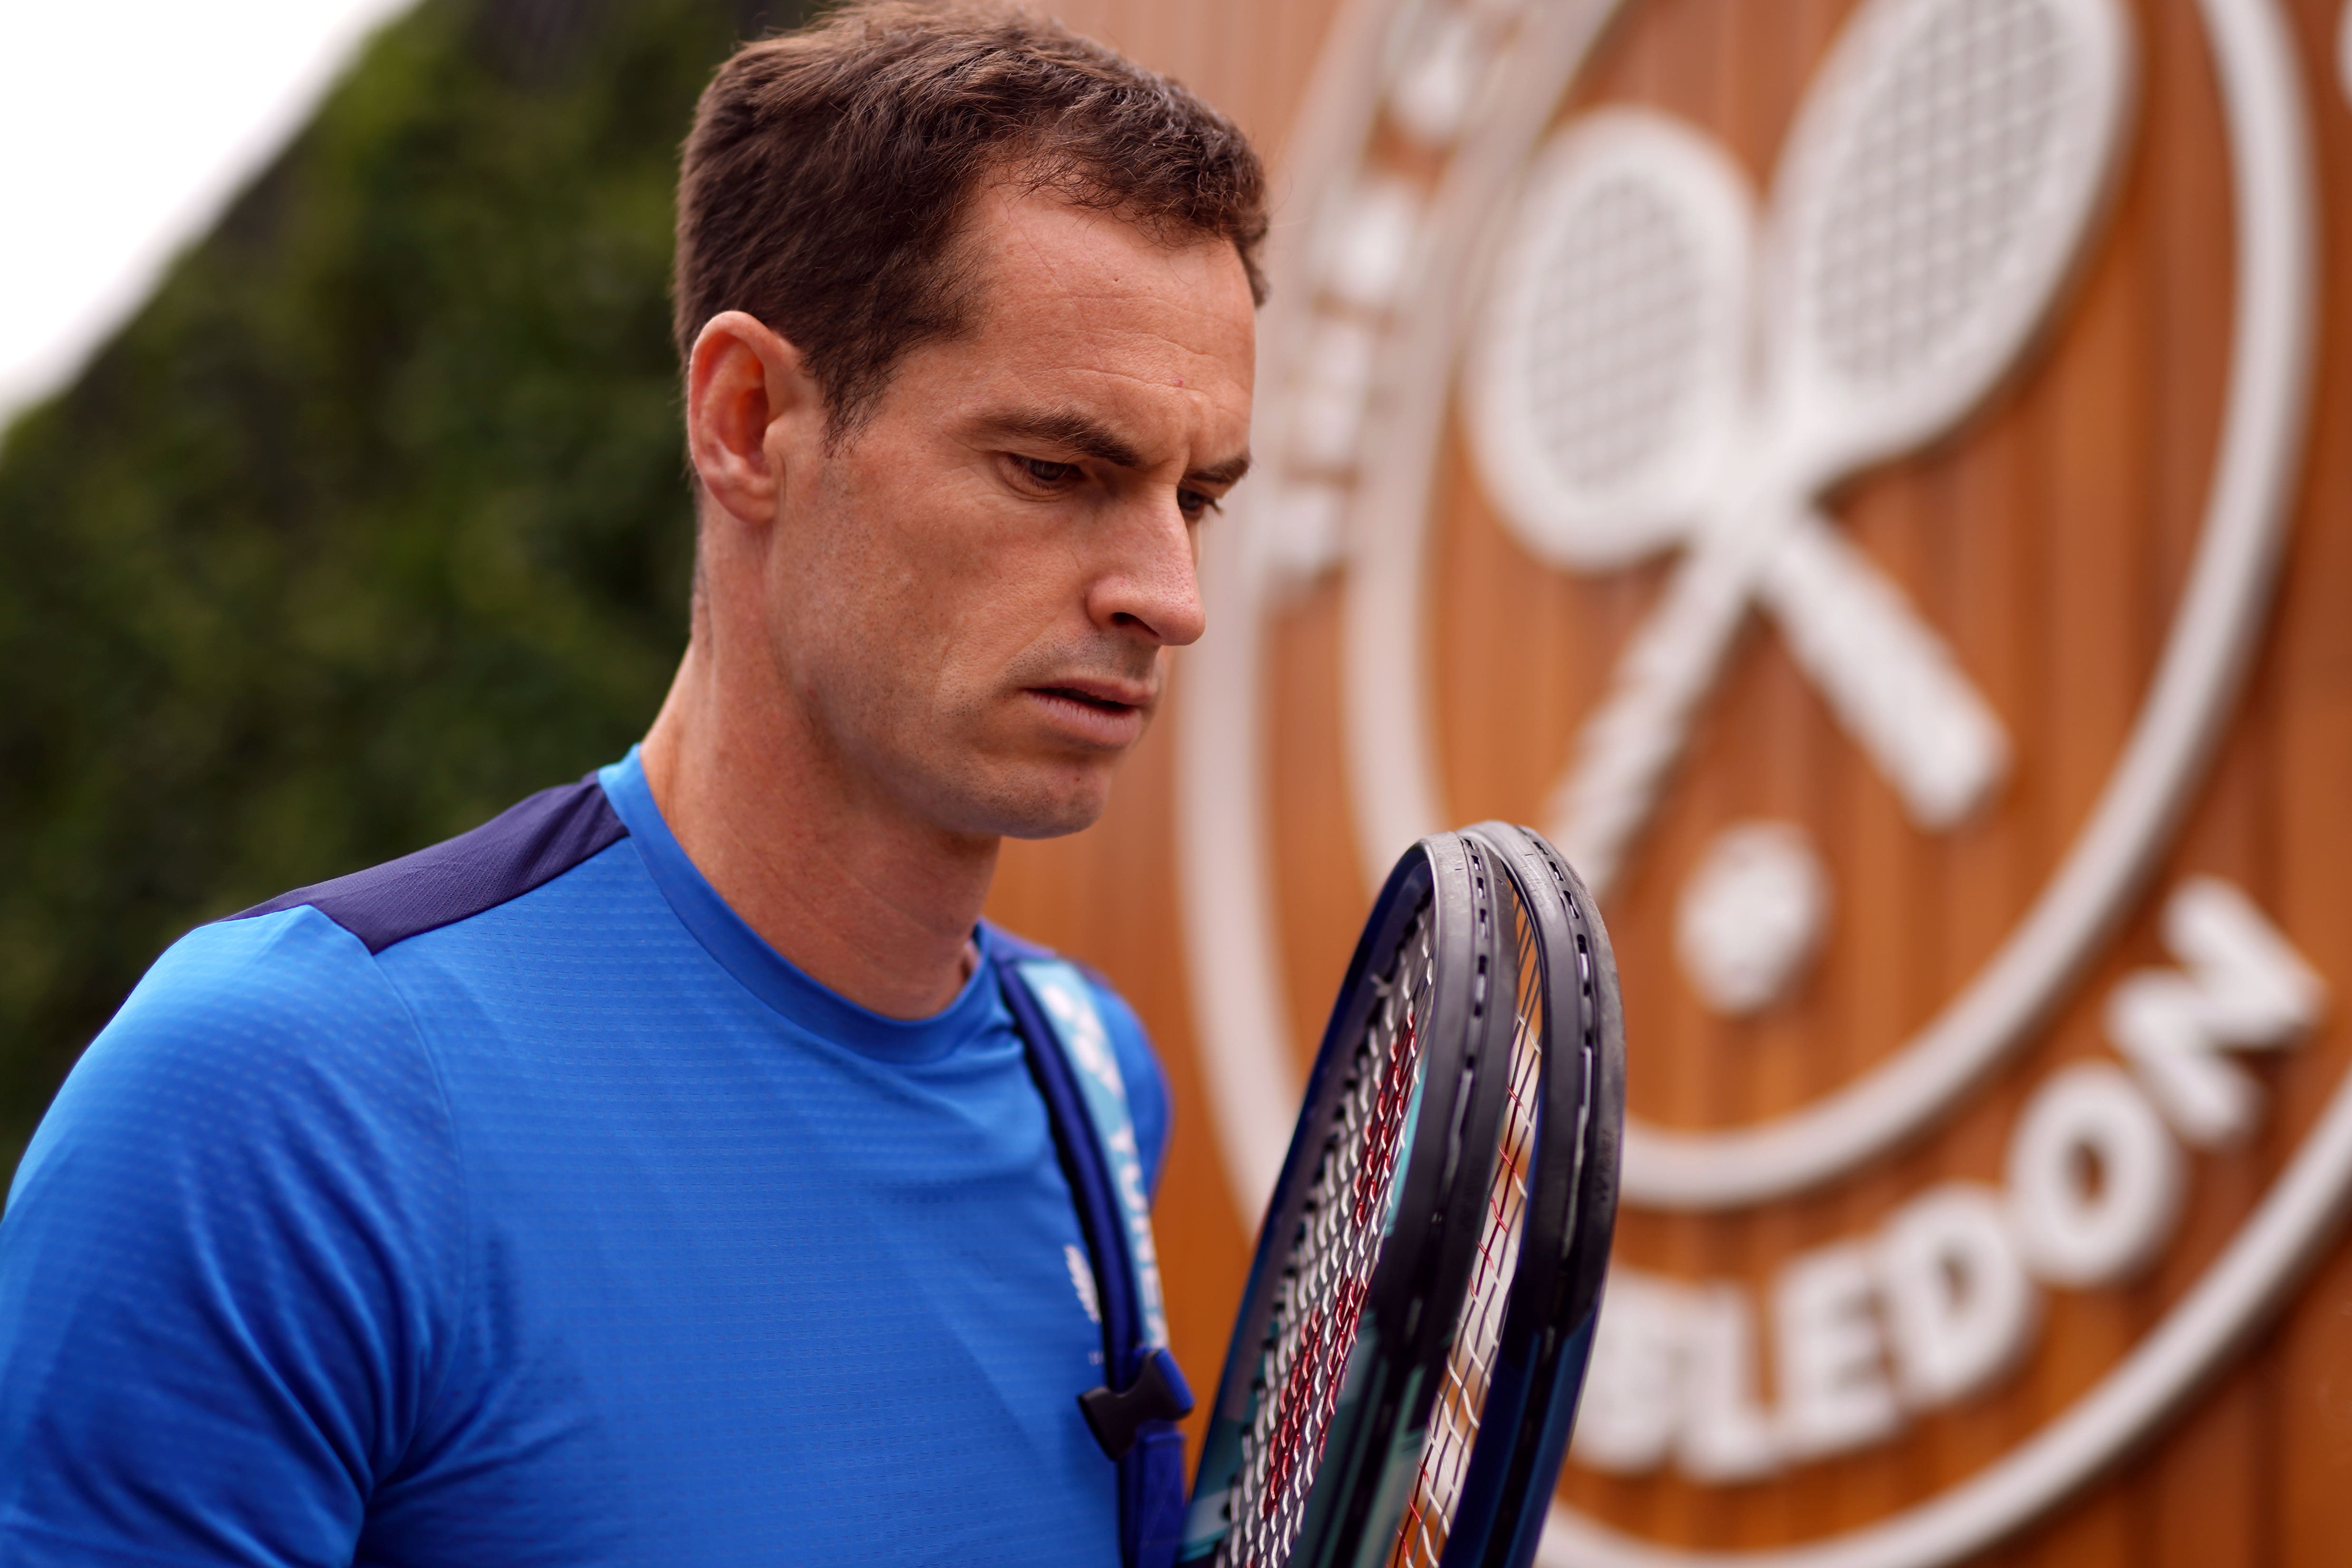 Two-time champion Andy Murray has played his final singles match at Wimbledon (Jordan Pettitt/PA)